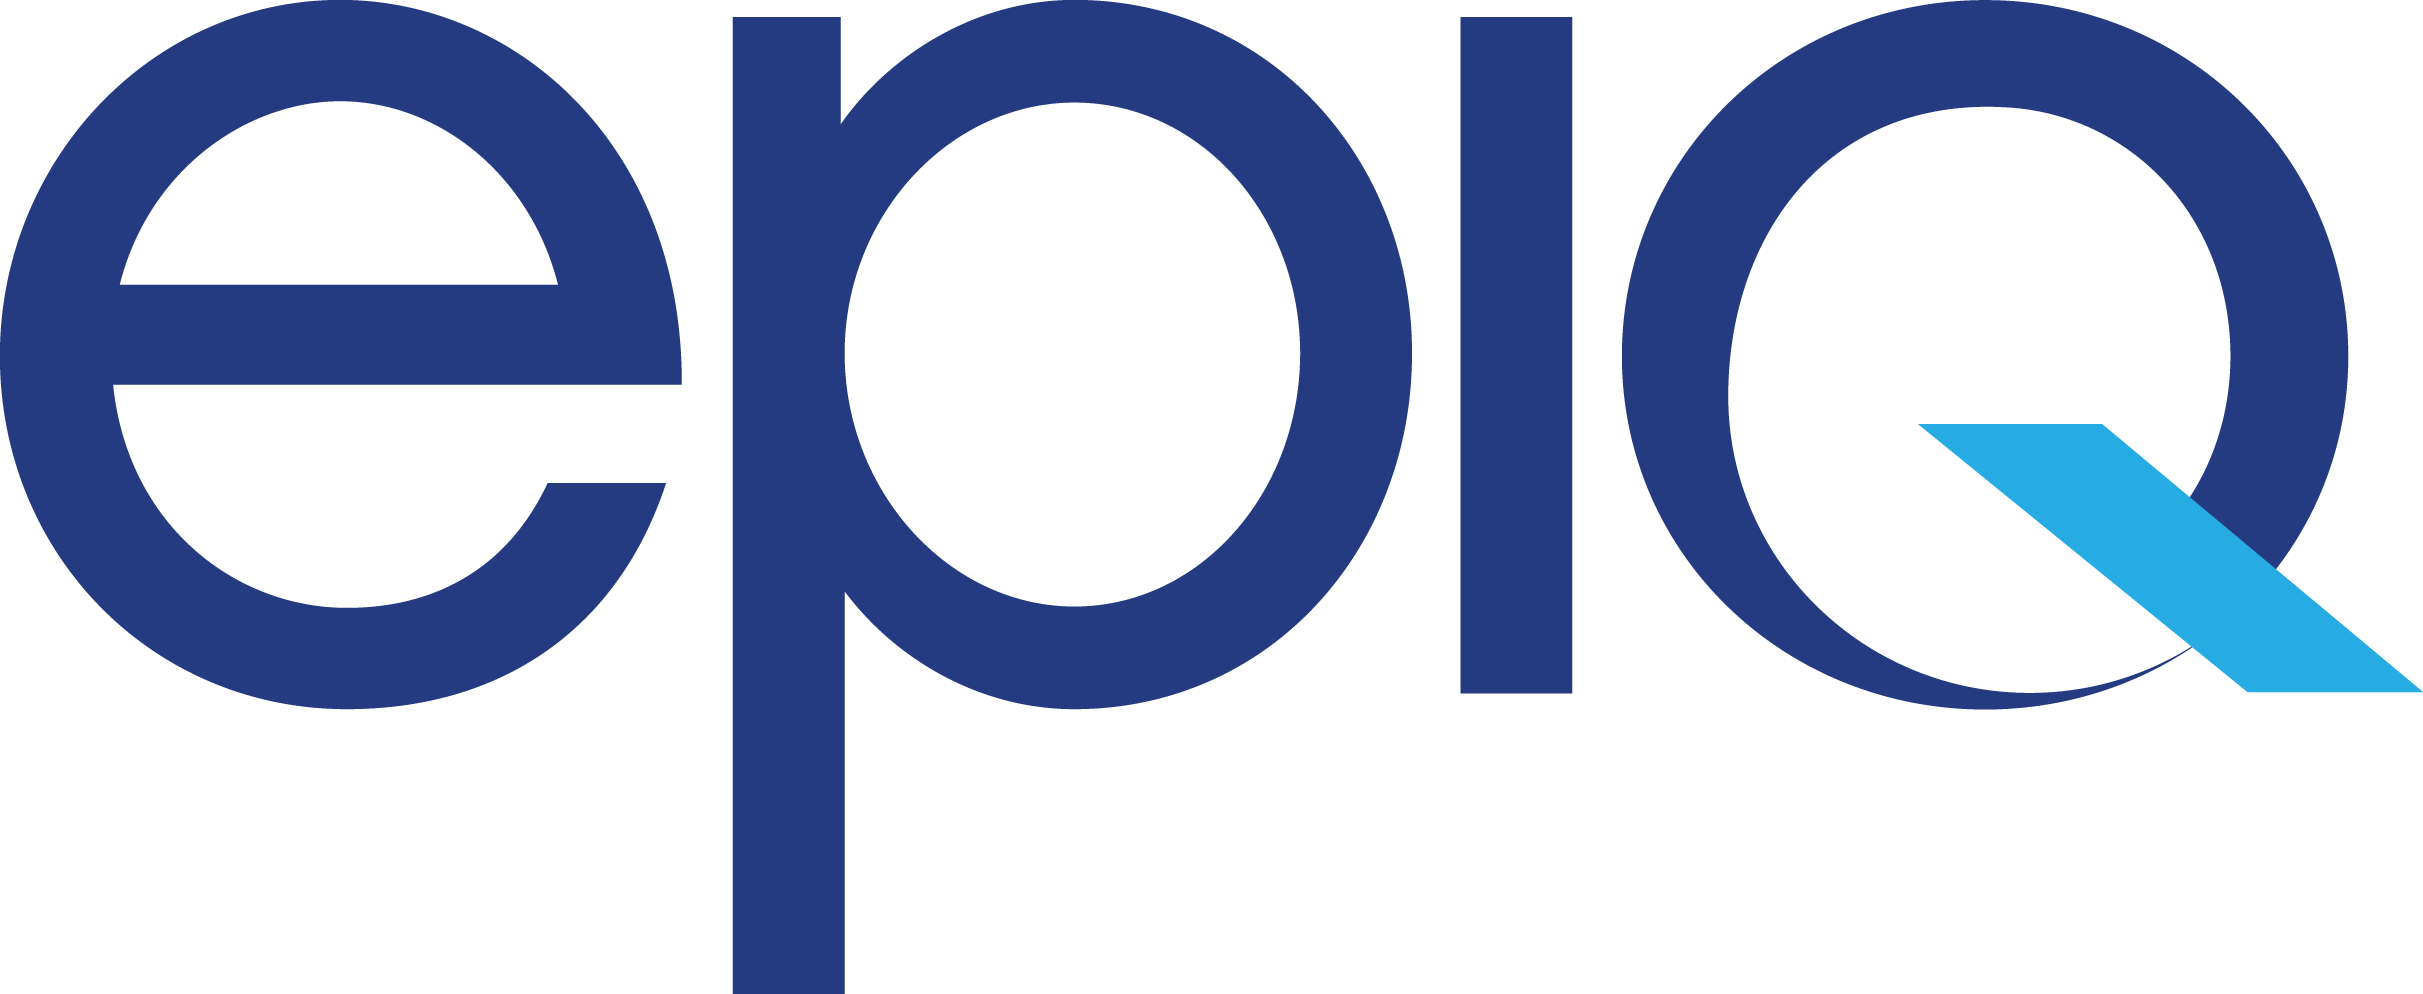 1465 Epiq Singapore Pte Ltd. logo